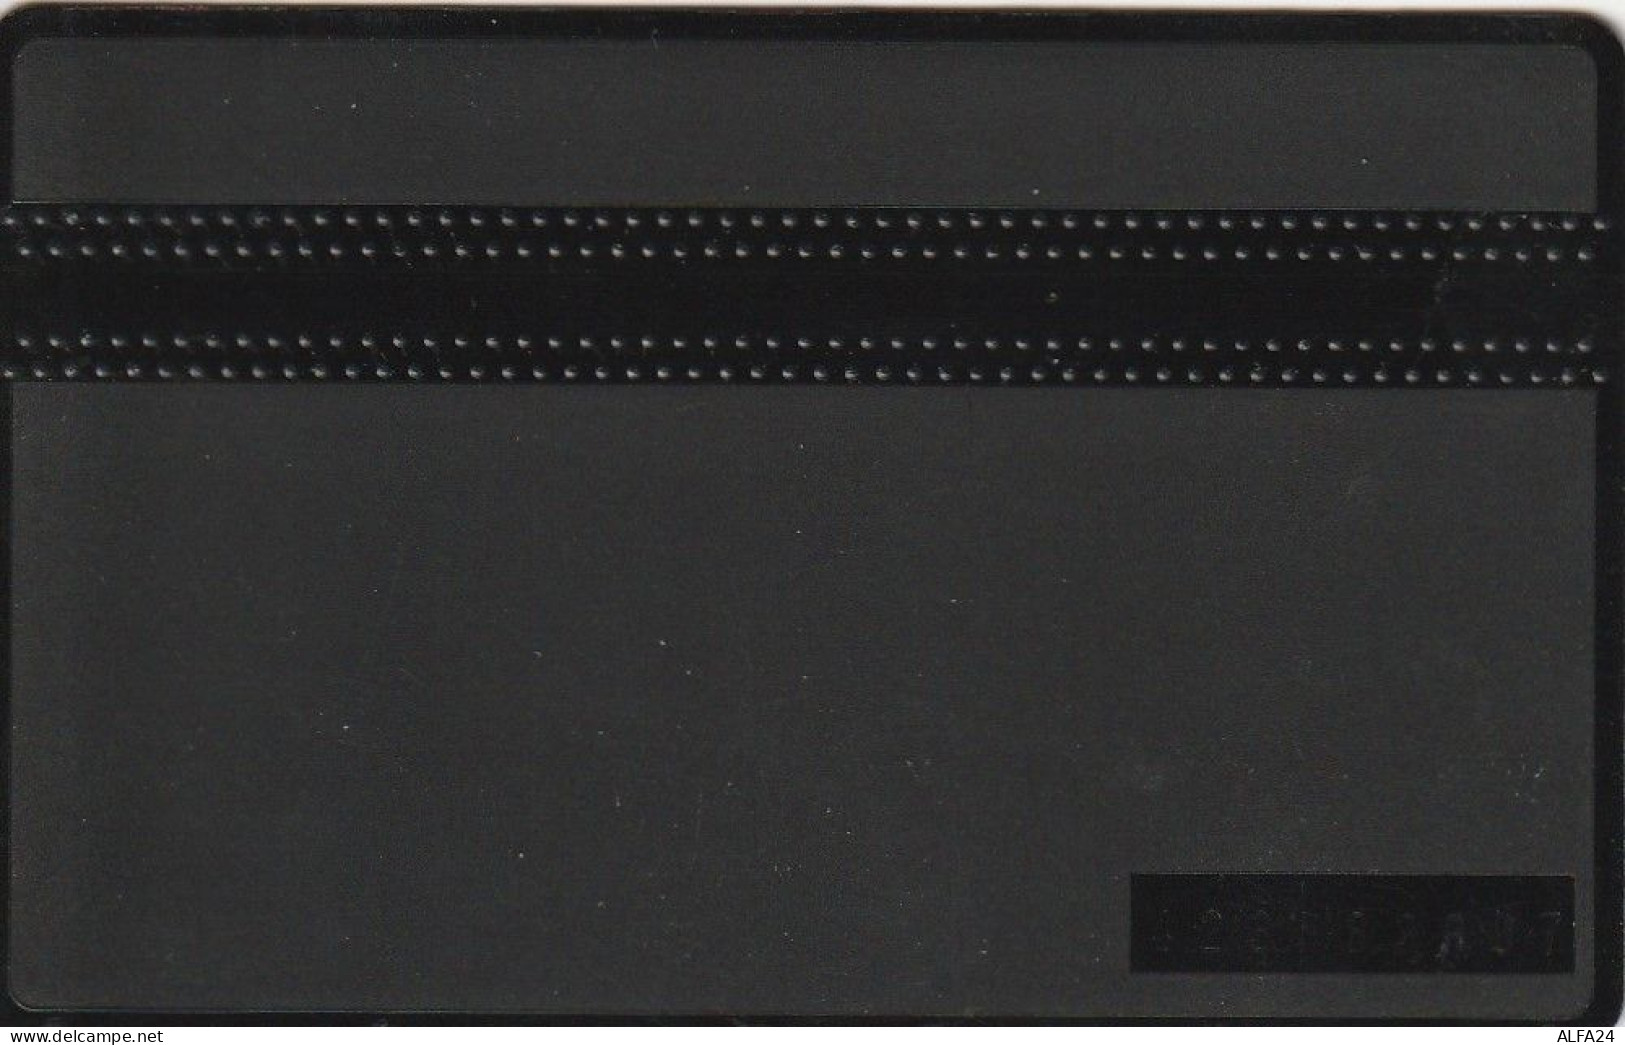 PHONE CARD BELGIO LG (CV6643 - Senza Chip